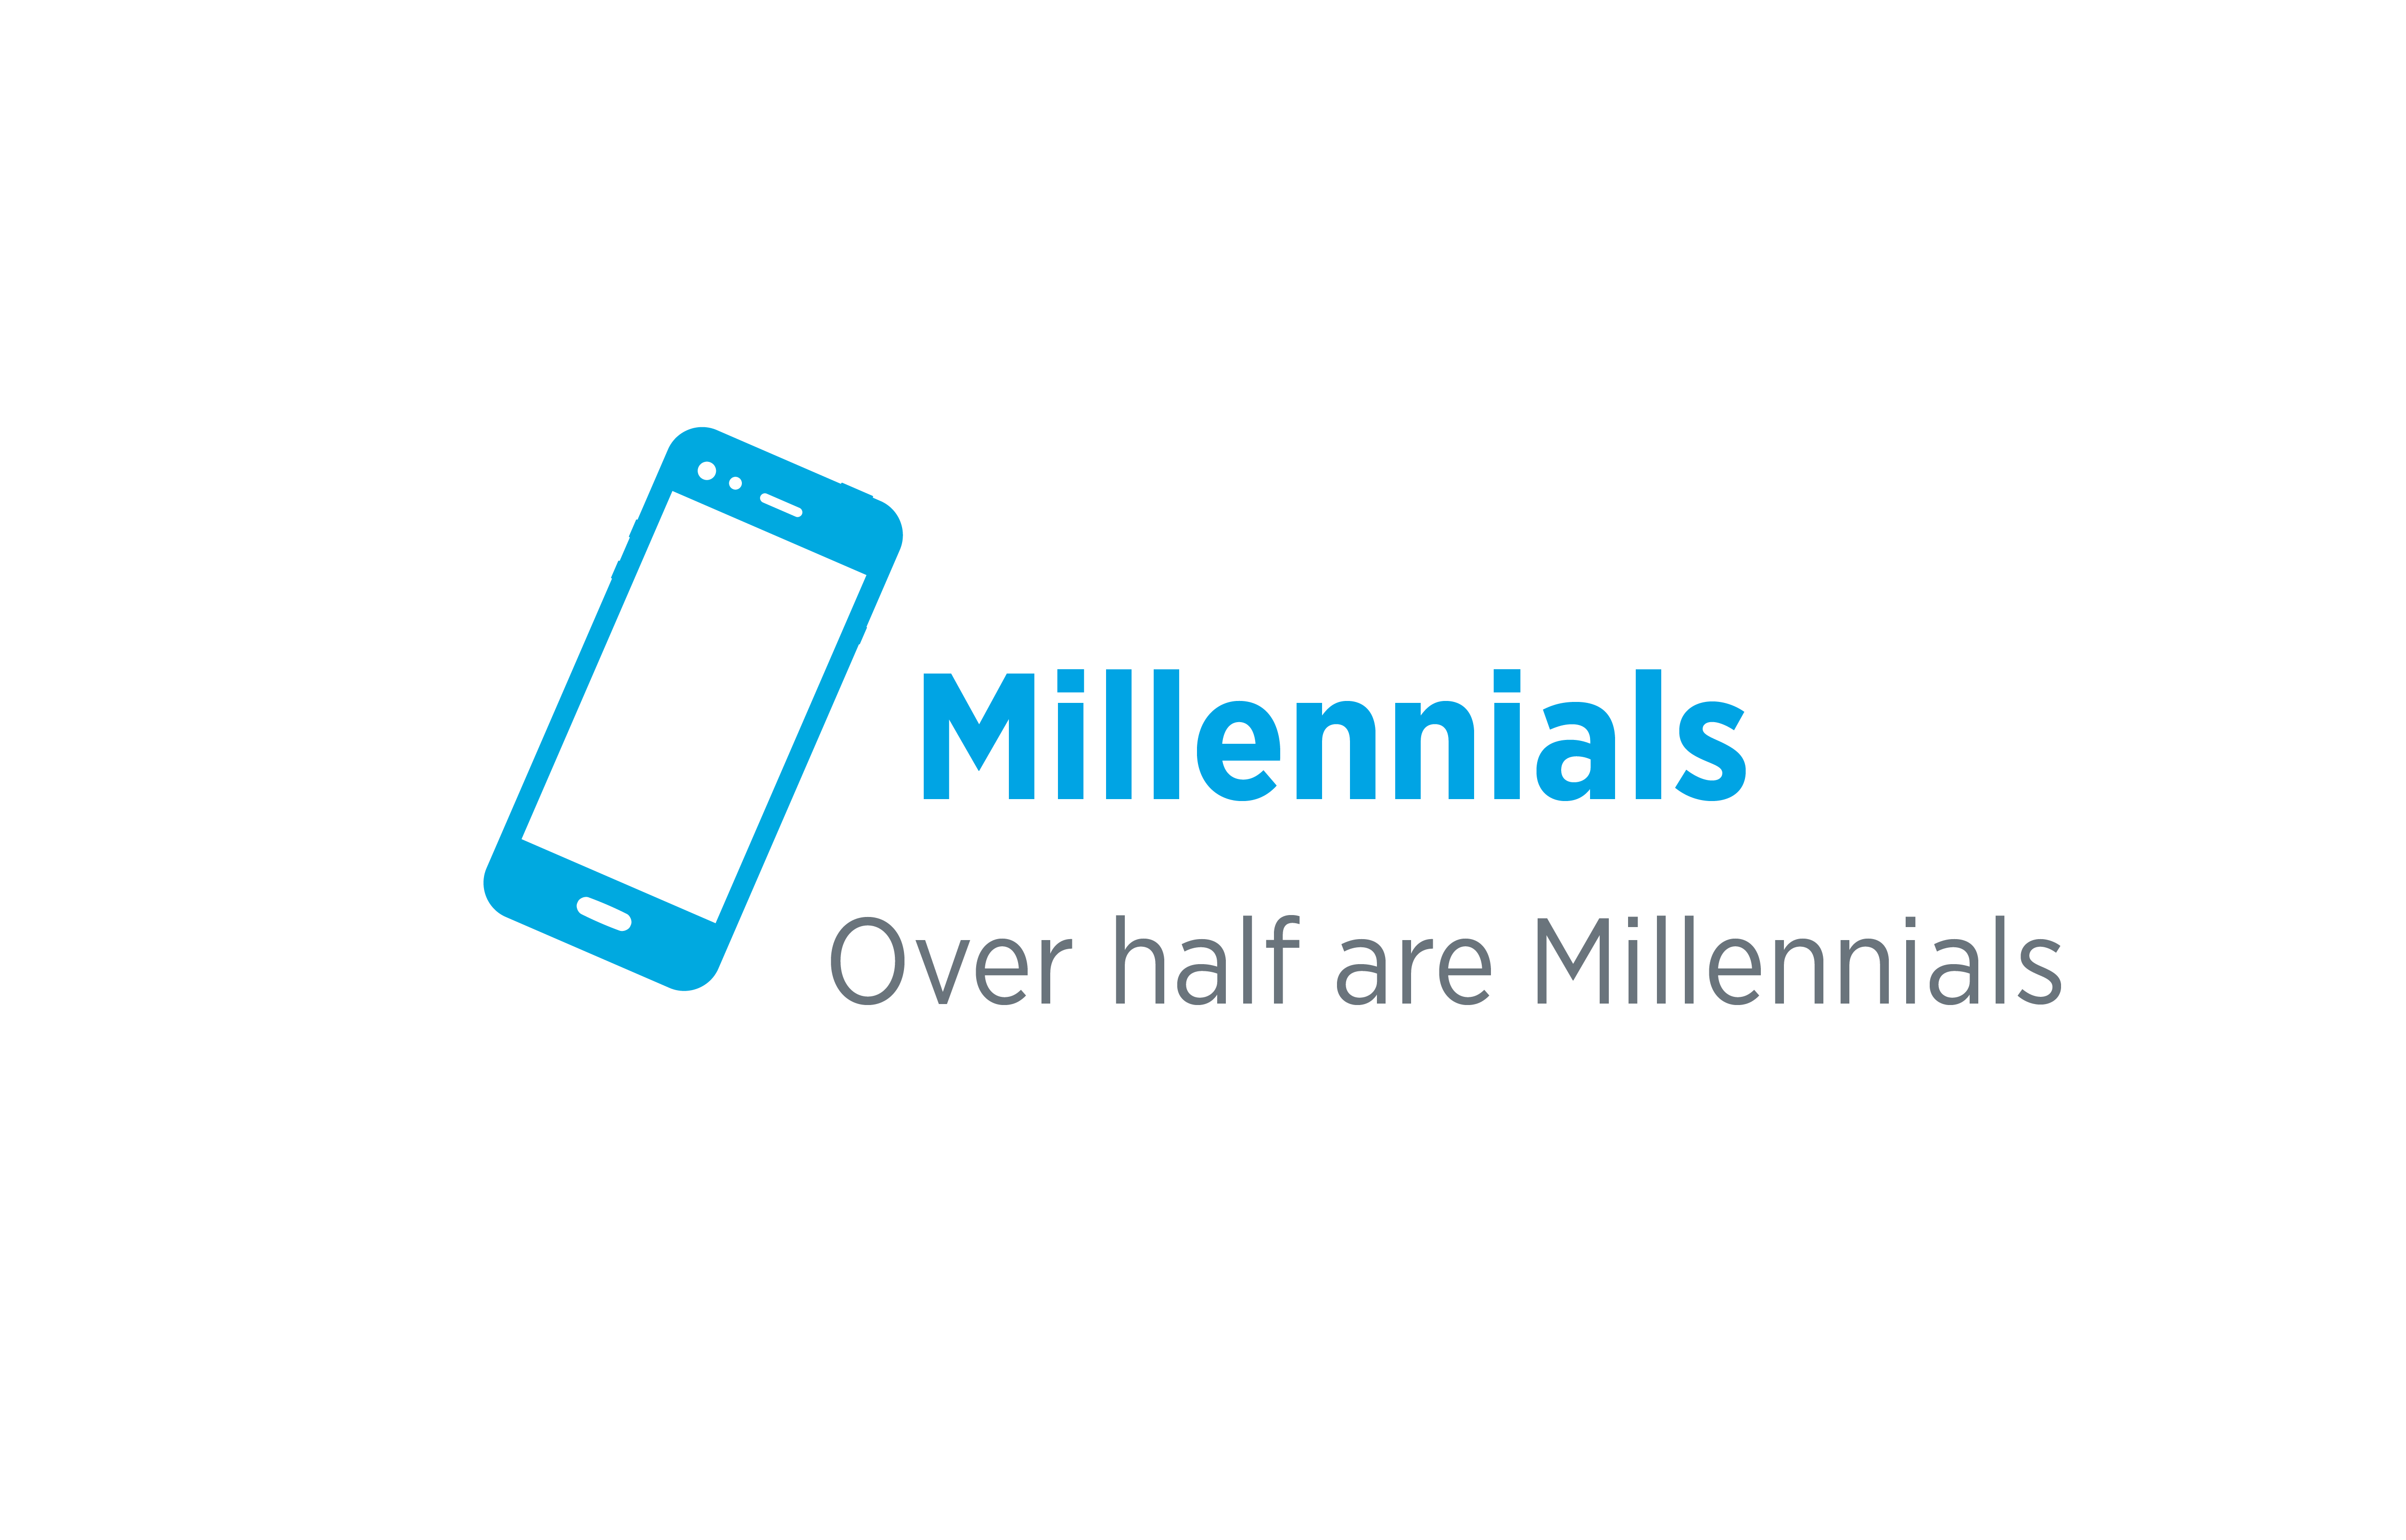 Over half are millennials